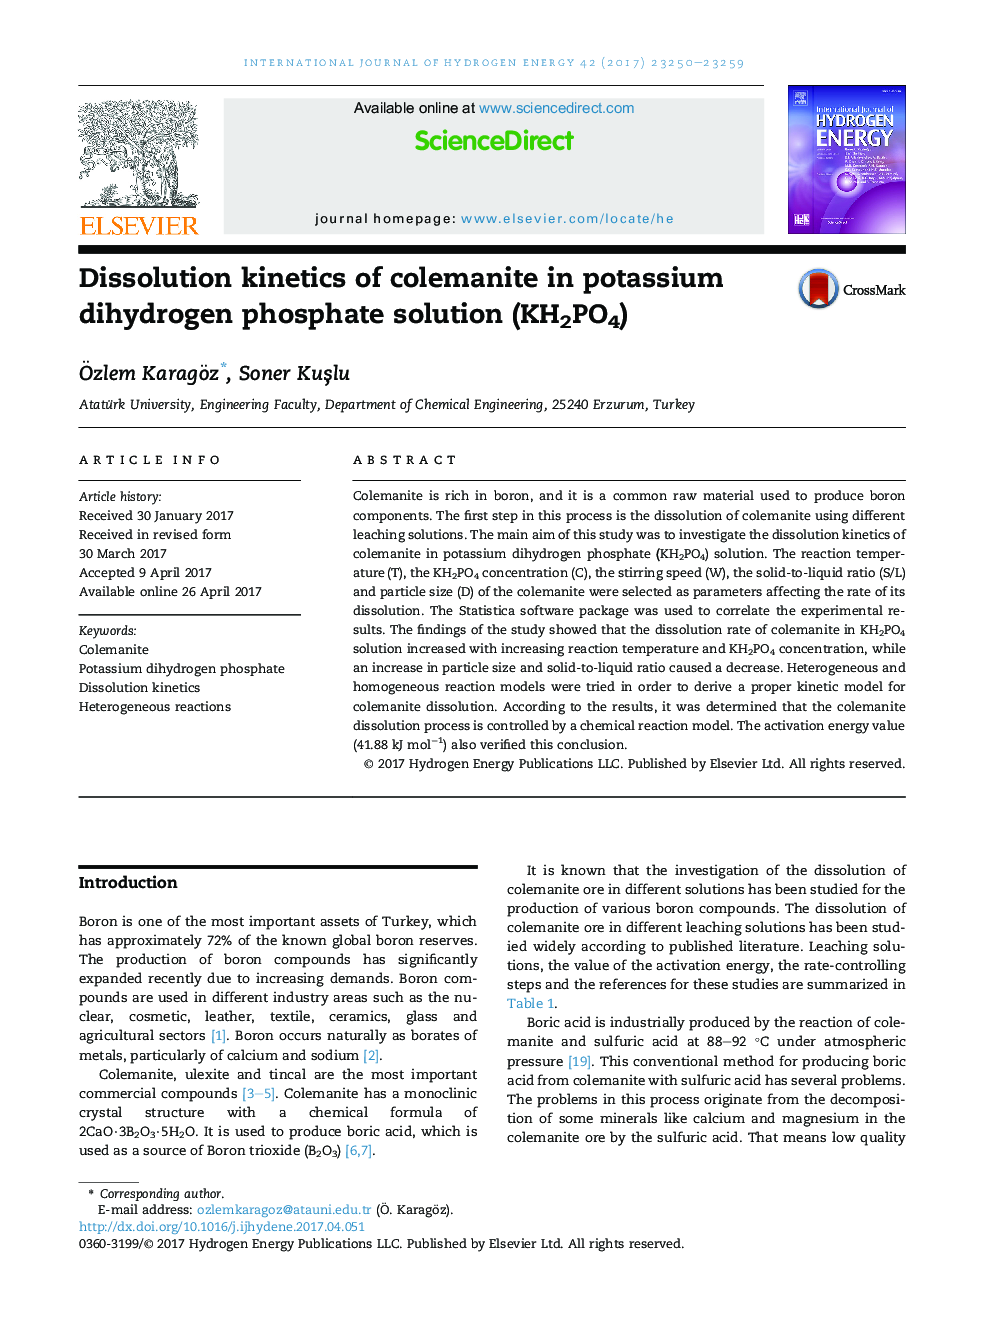 Dissolution kinetics of colemanite in potassium dihydrogen phosphate solution (KH2PO4)